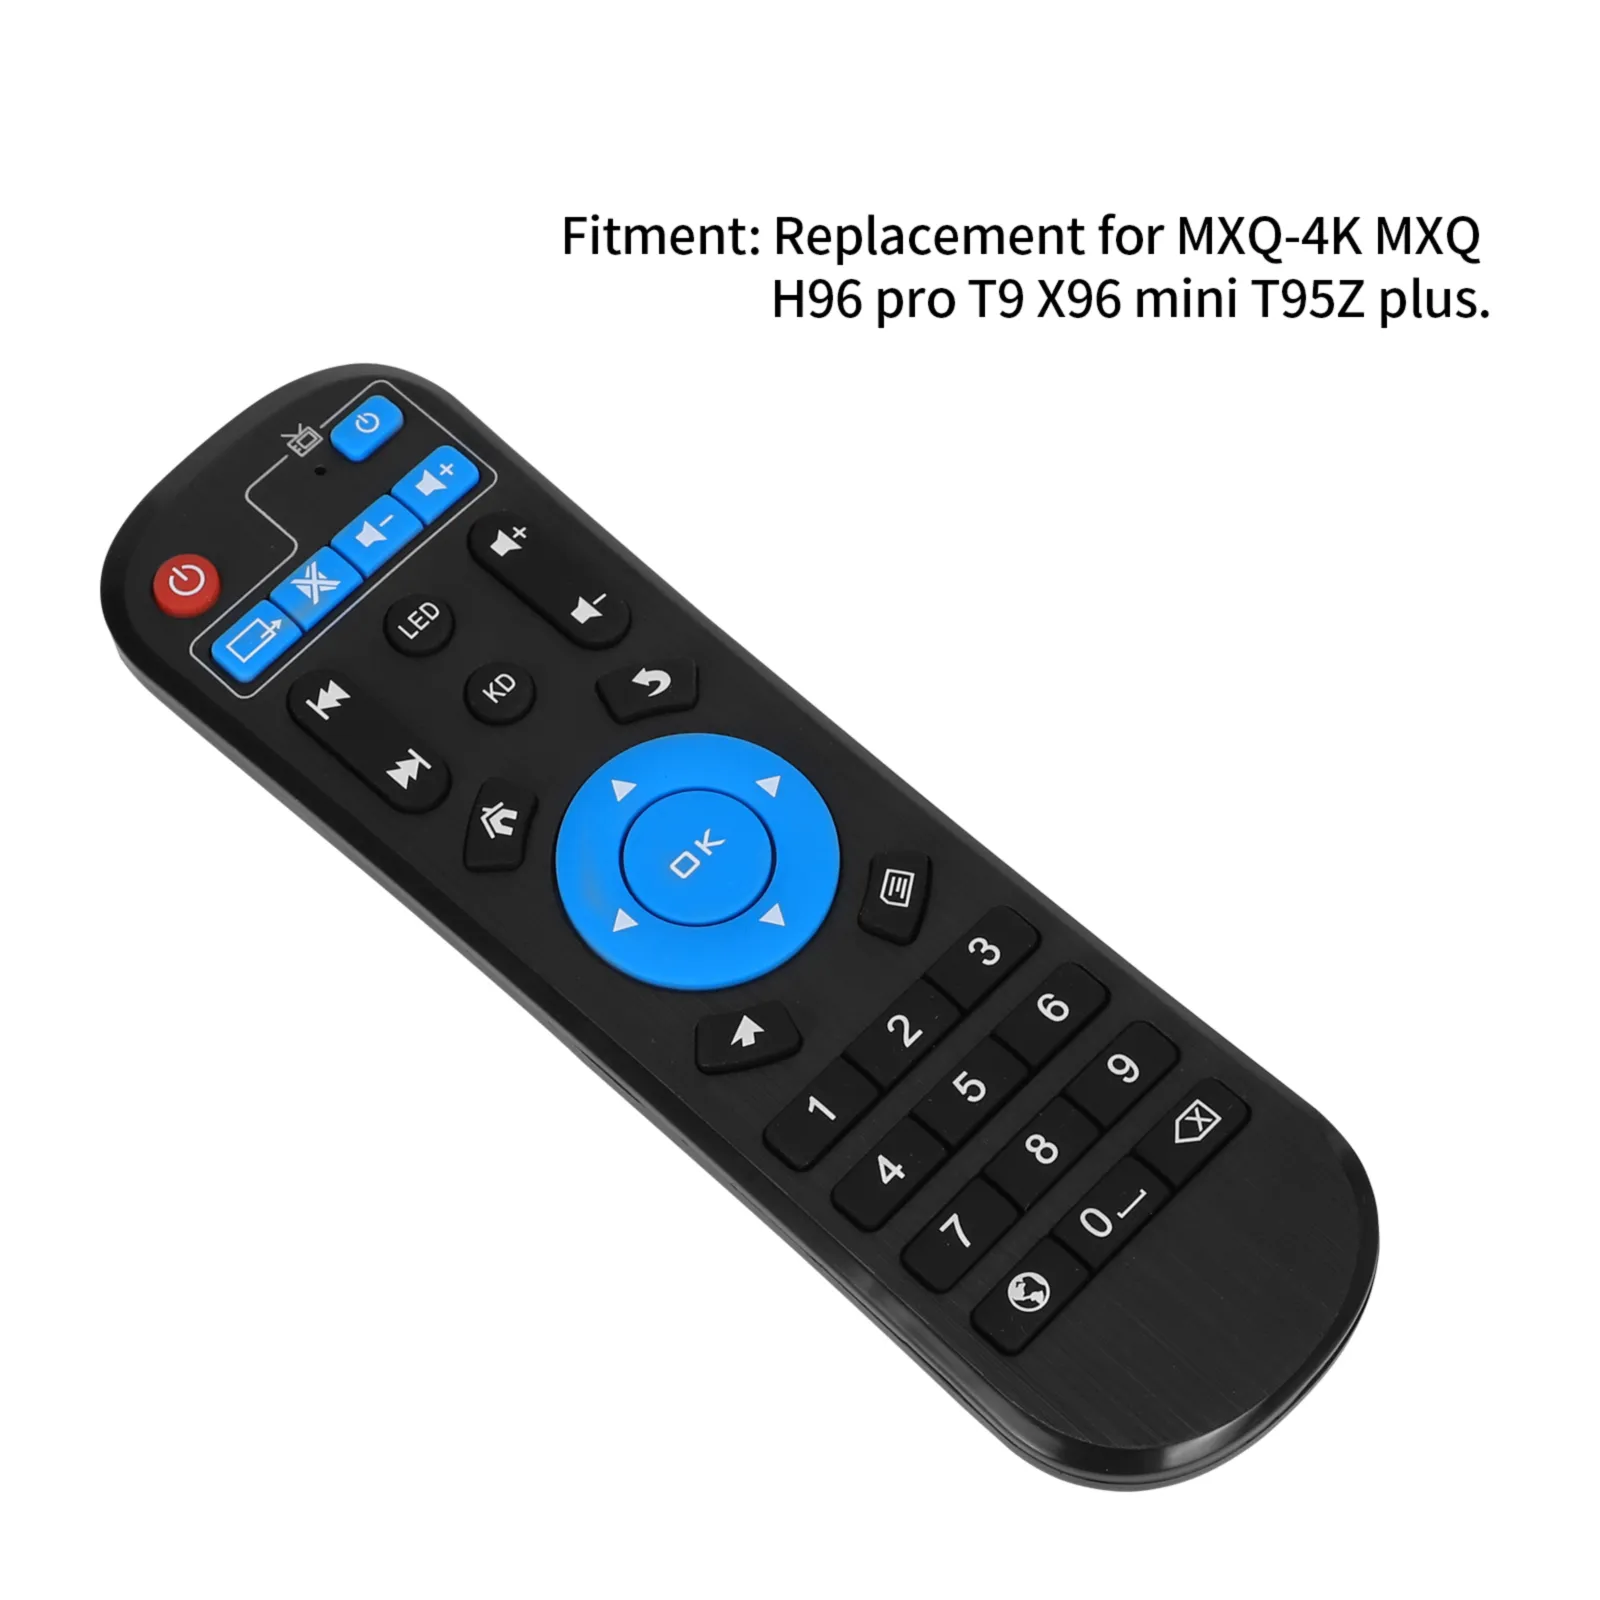 Replacement Remote Control Controller For MXQ-4K MXQ H96 pro T9 X96 mini T95Z plus X88 T95 Max Plus Smart Android TV Box Remote Control